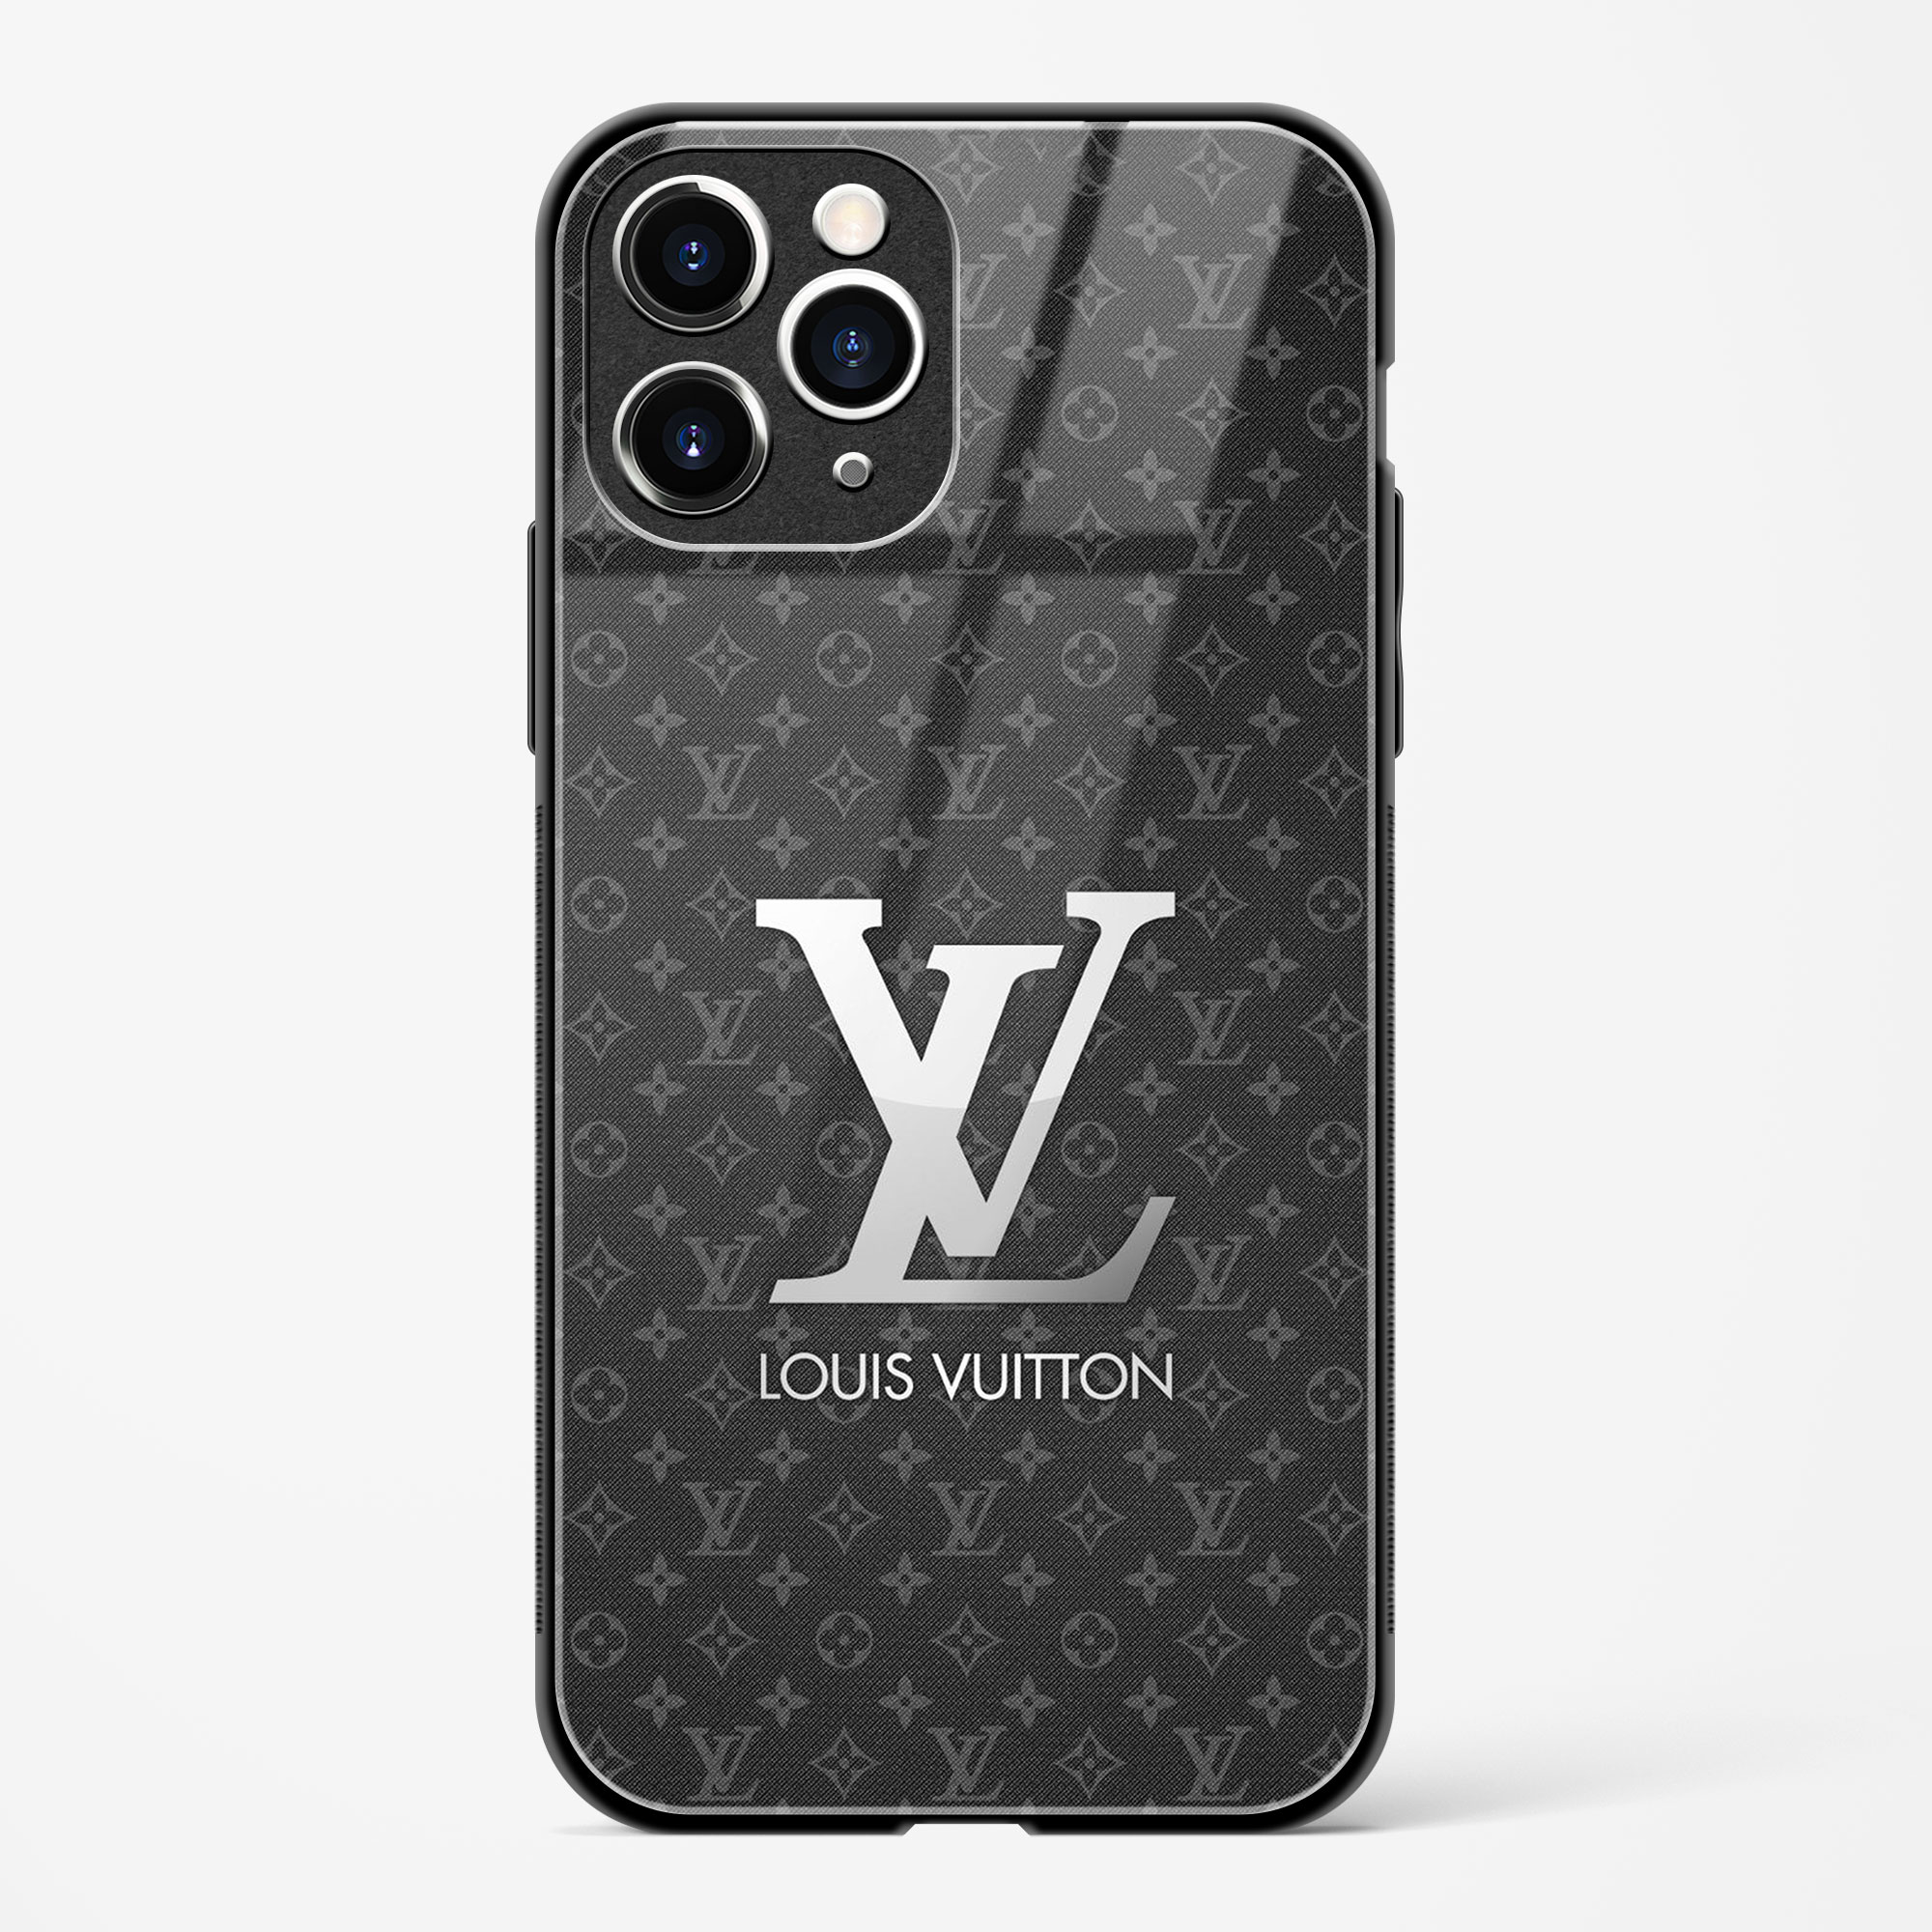 LV Apple iPhone 11 Pro Max Case